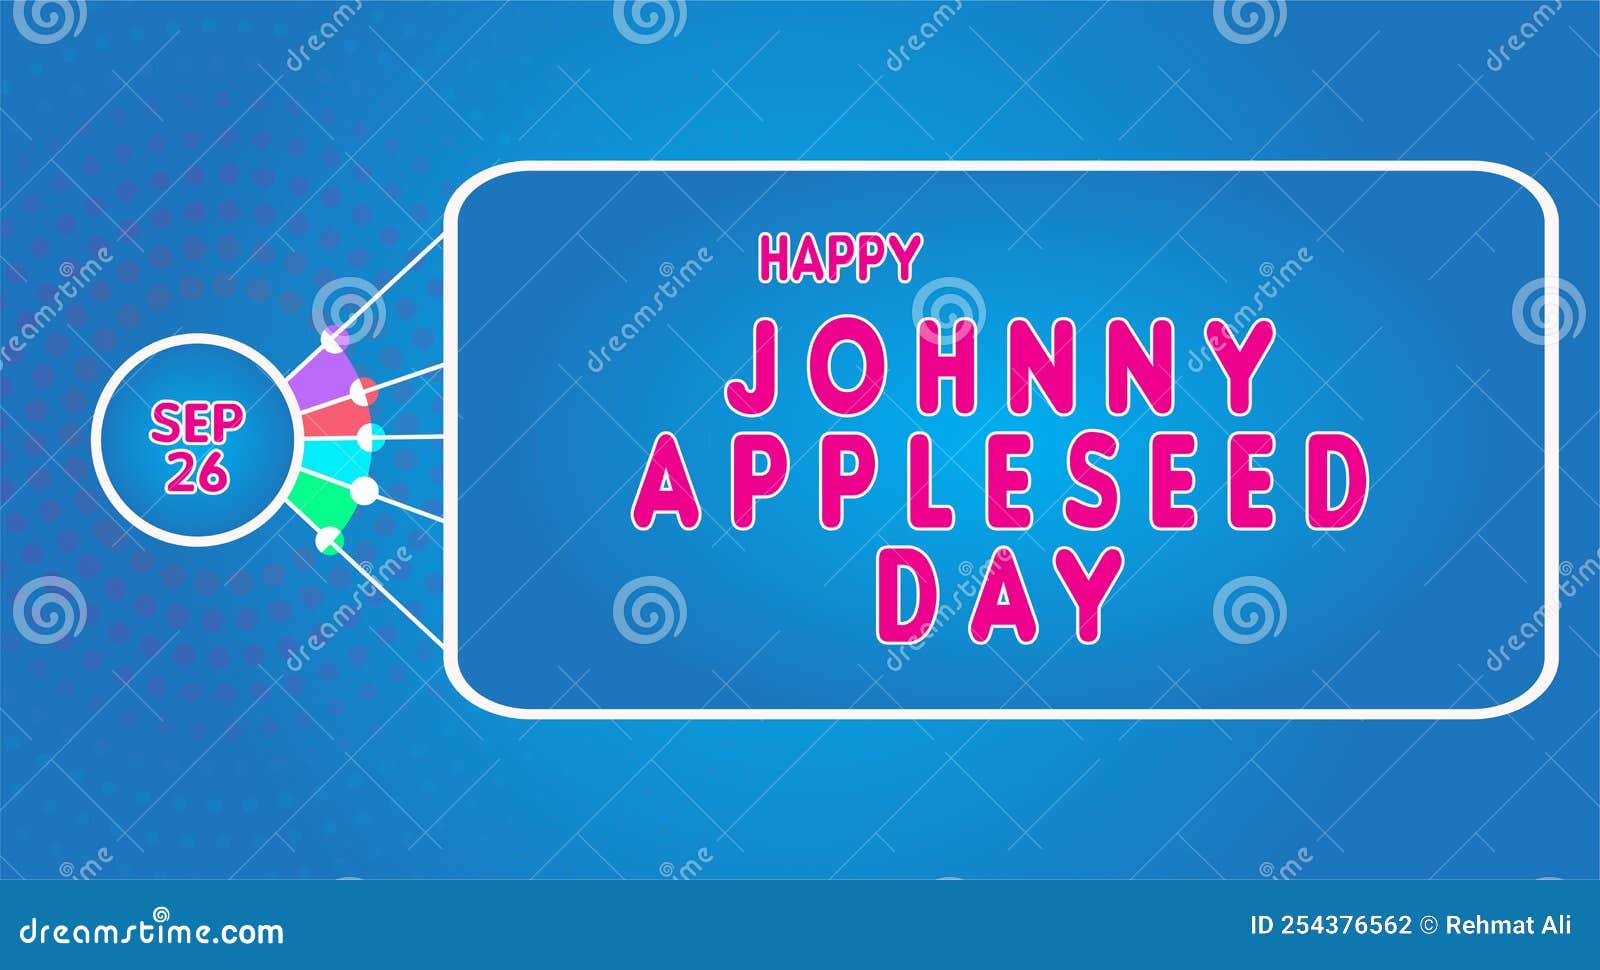 Happy Johnny Appleseed Day, September 26. Calendar of September Text